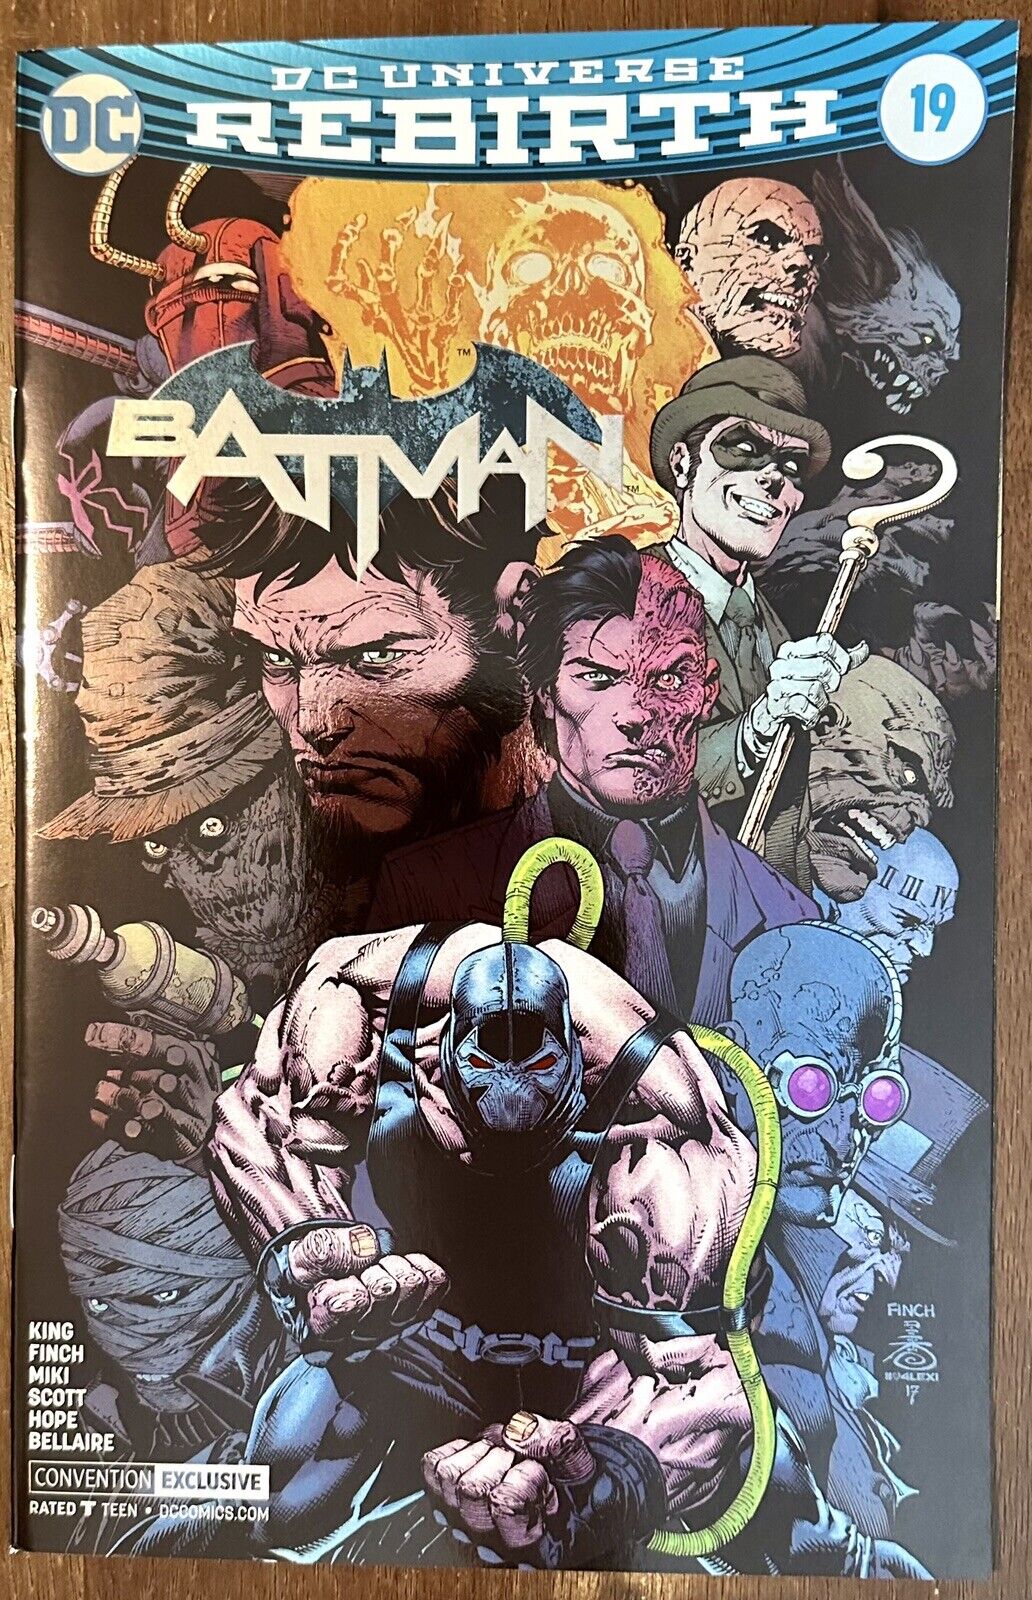 BATMAN # 19 Convention Exclusive Foil Variant Cover David Finch DC Comics NM